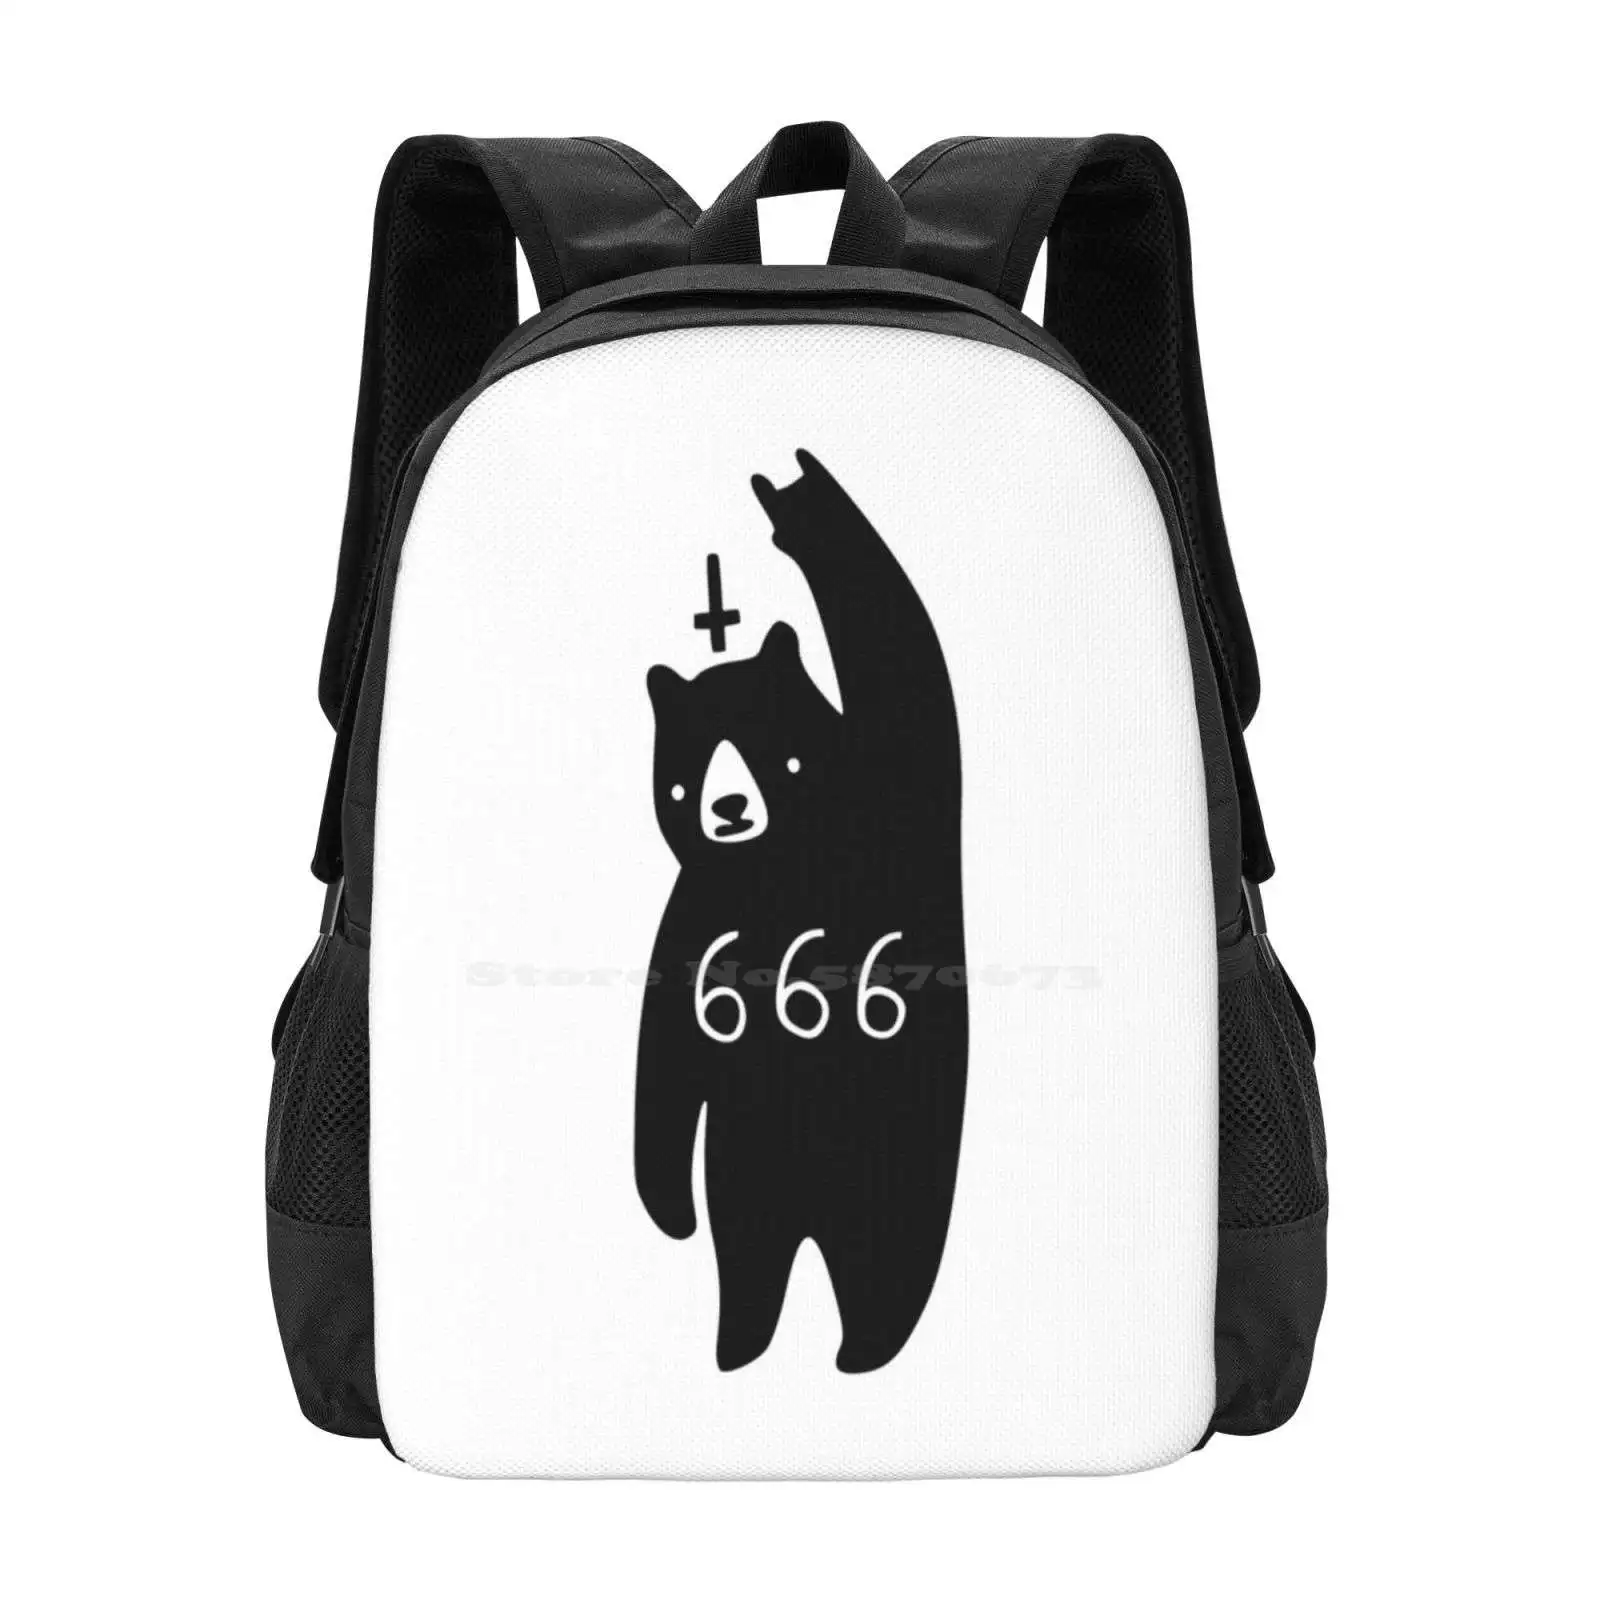 

Black Bear Metal Hot Sale Backpack Fashion Bags Black Bear Blackest Bear 666 Satan Funny Devil Horns Metal And Roll On Out